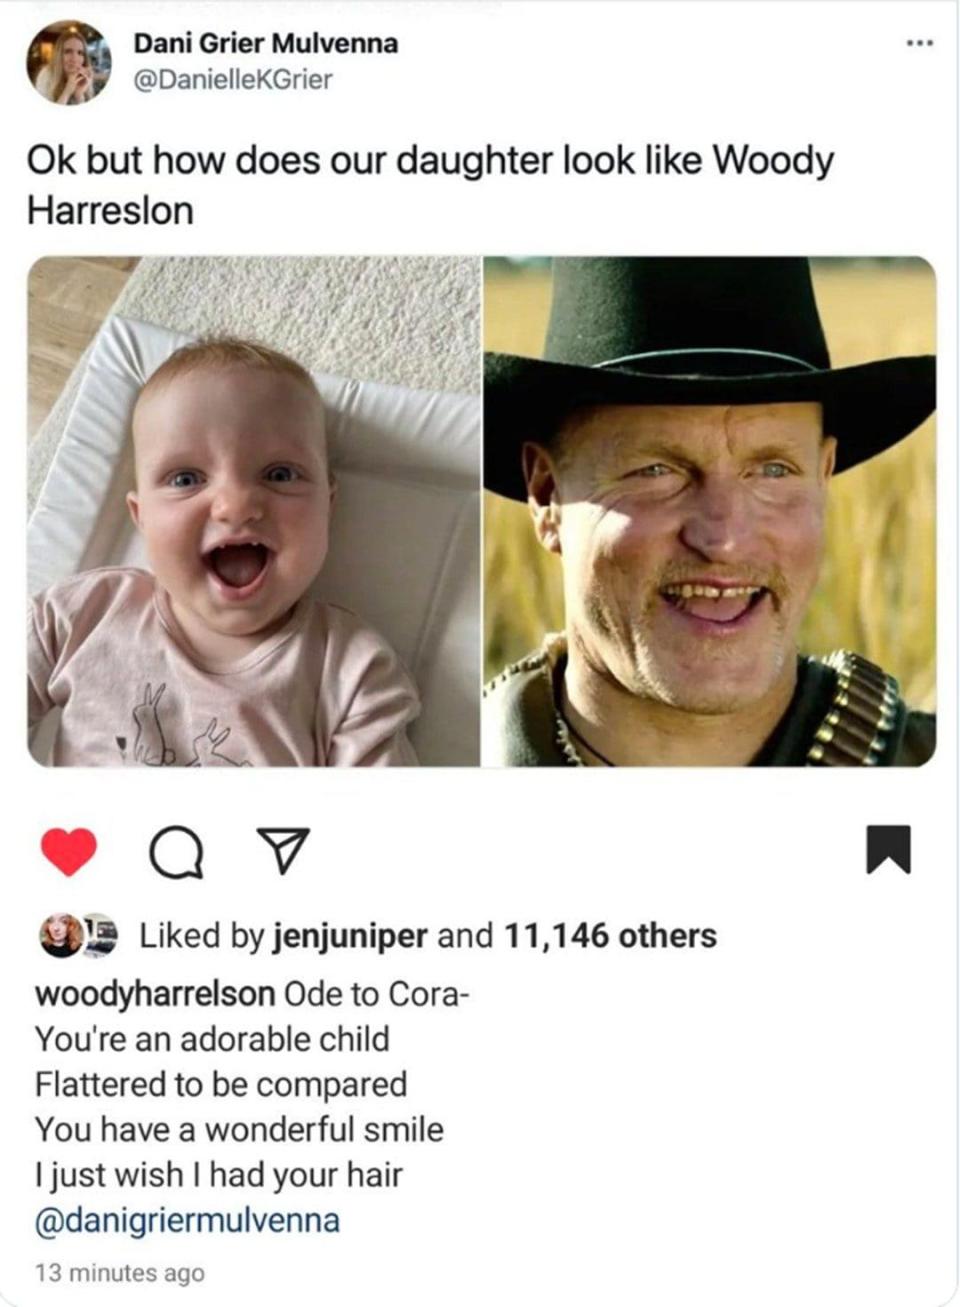 Woody Harrelson Instagram post - Instagram/Woody Harrelson